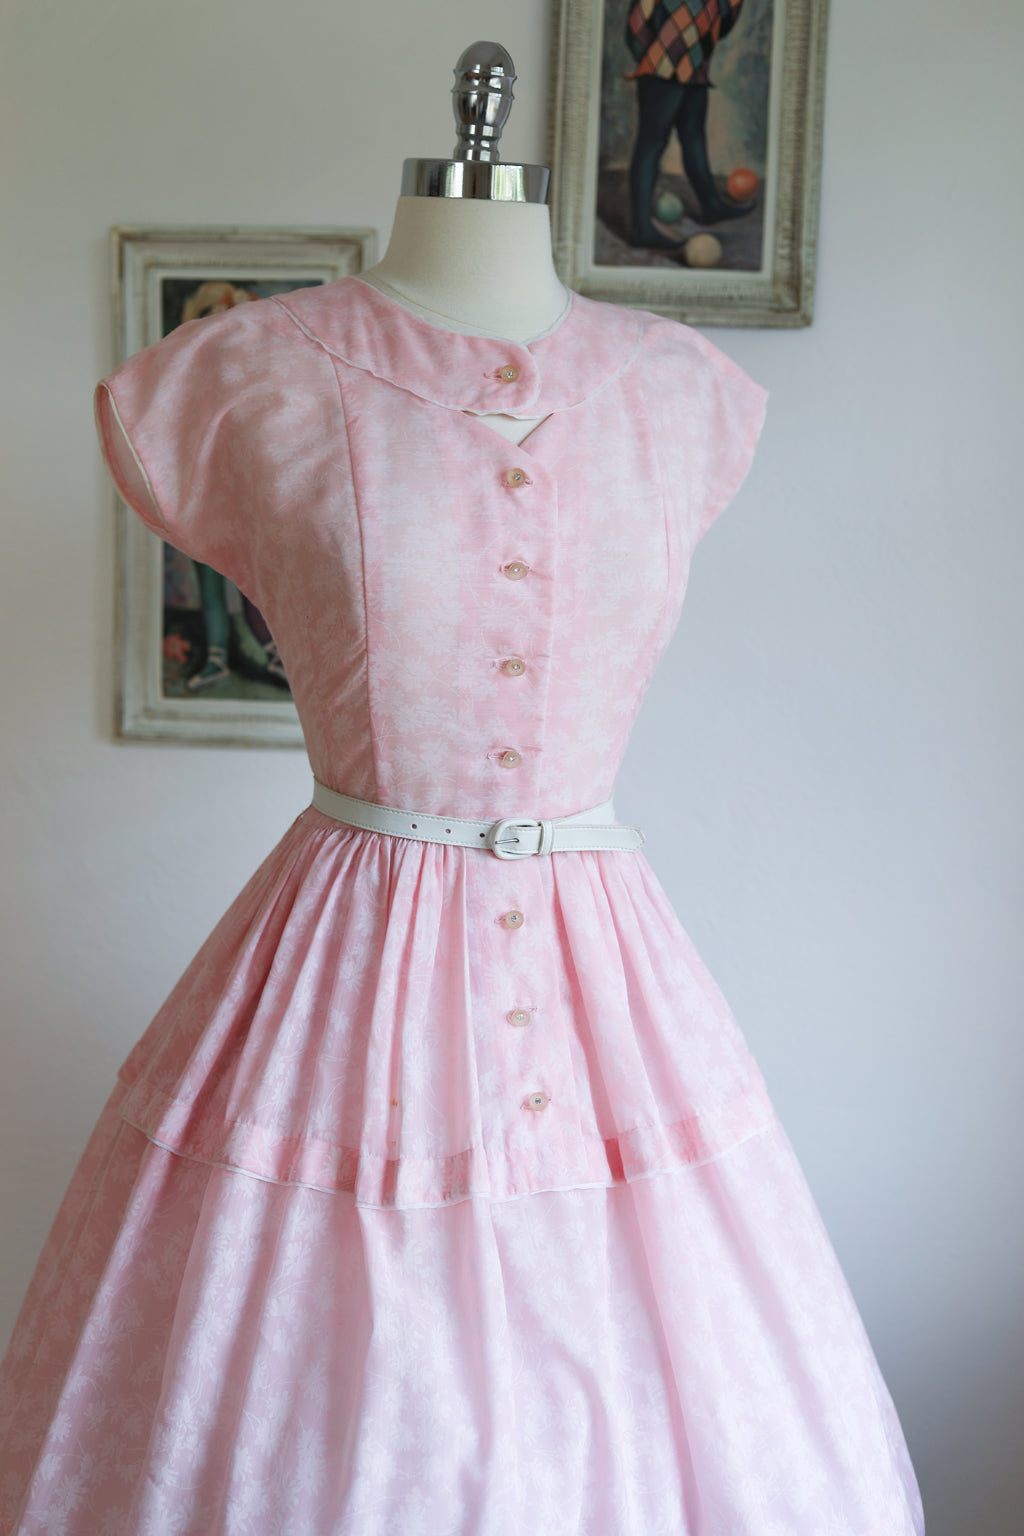 Vintage 1950s Party Dress - Soft Pastel Pink + Daisy Print Cotton Voile w Keyhole + Princess Seams Shirtwaist Sundress Size S